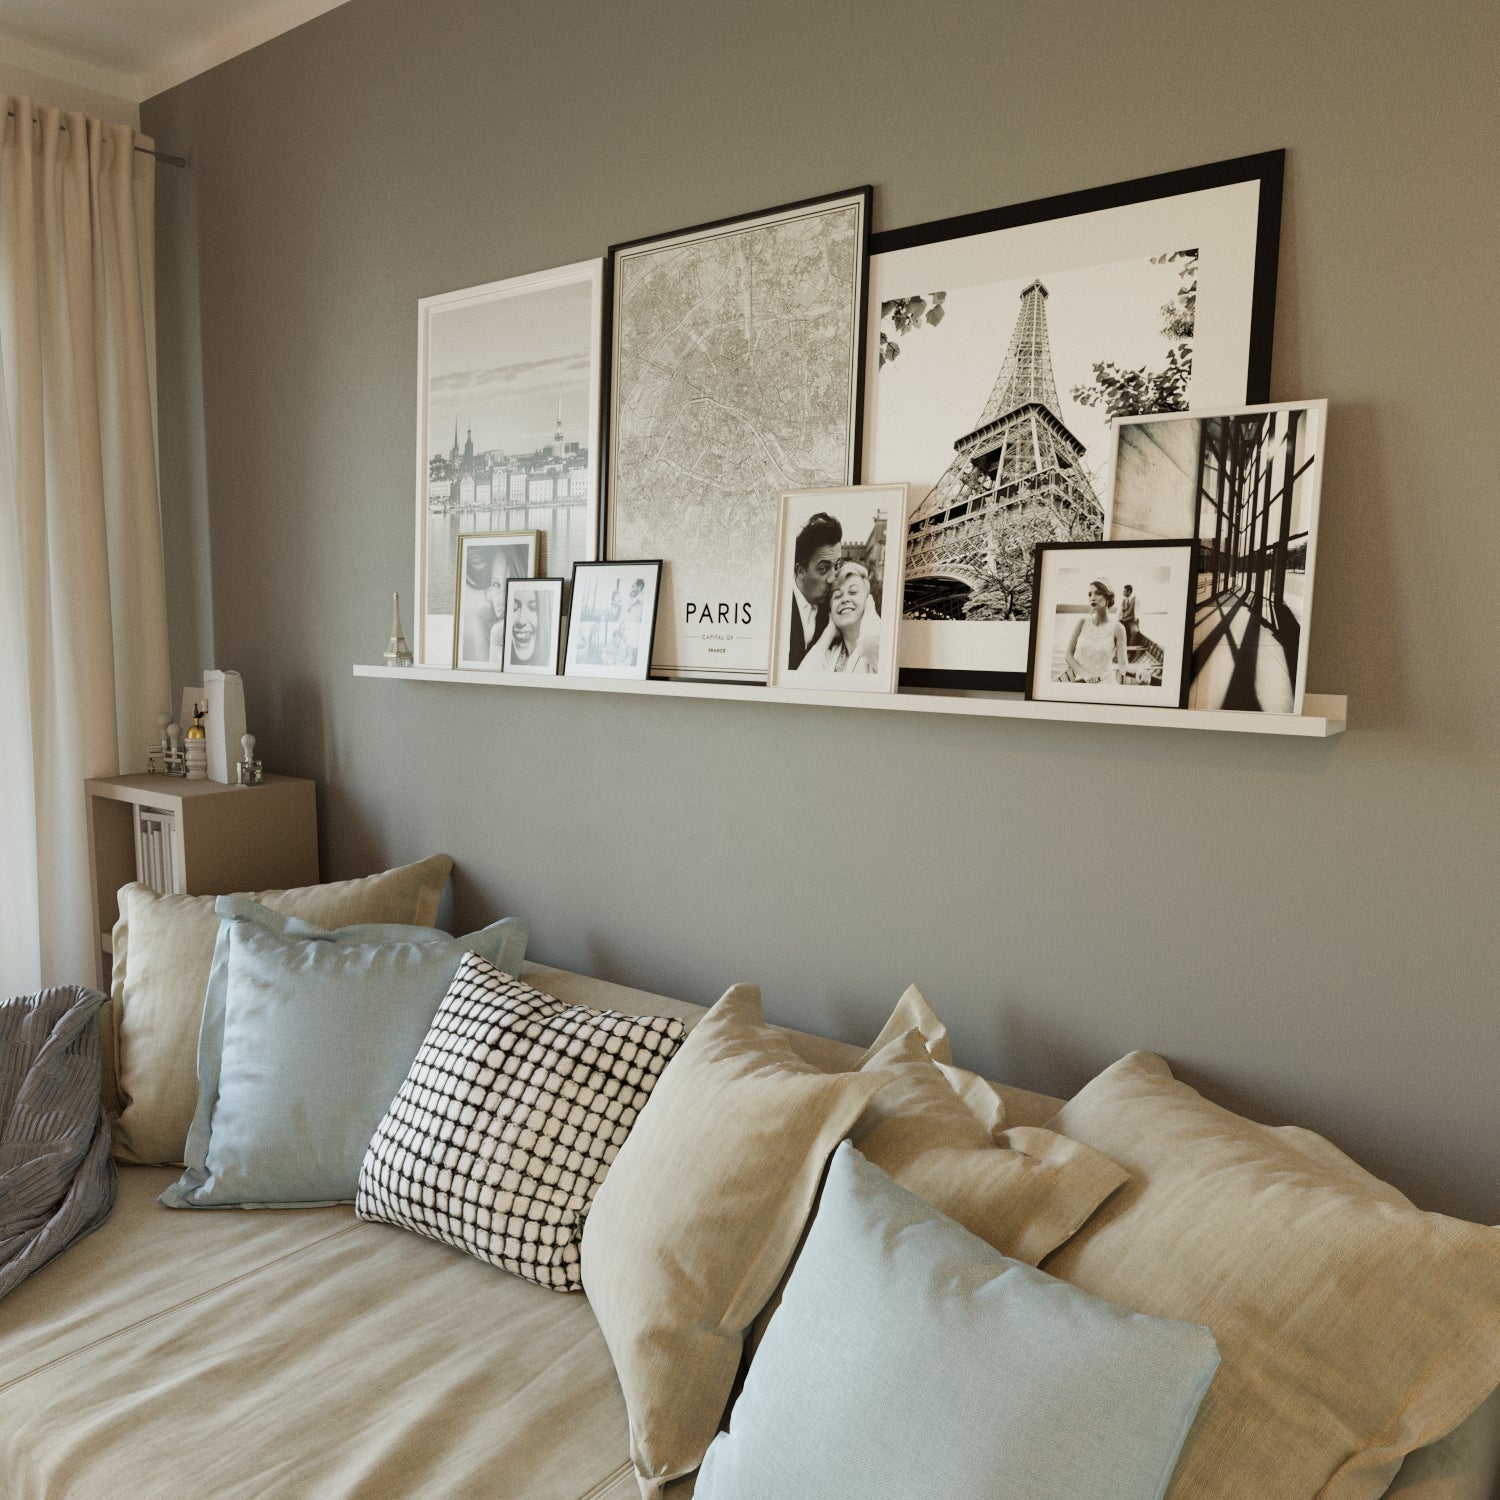 DENVER 72" Floating Shelves Wall Bookshelf and Picture Ledge for Living Room Decor – Set of 2 – White - Wallniture